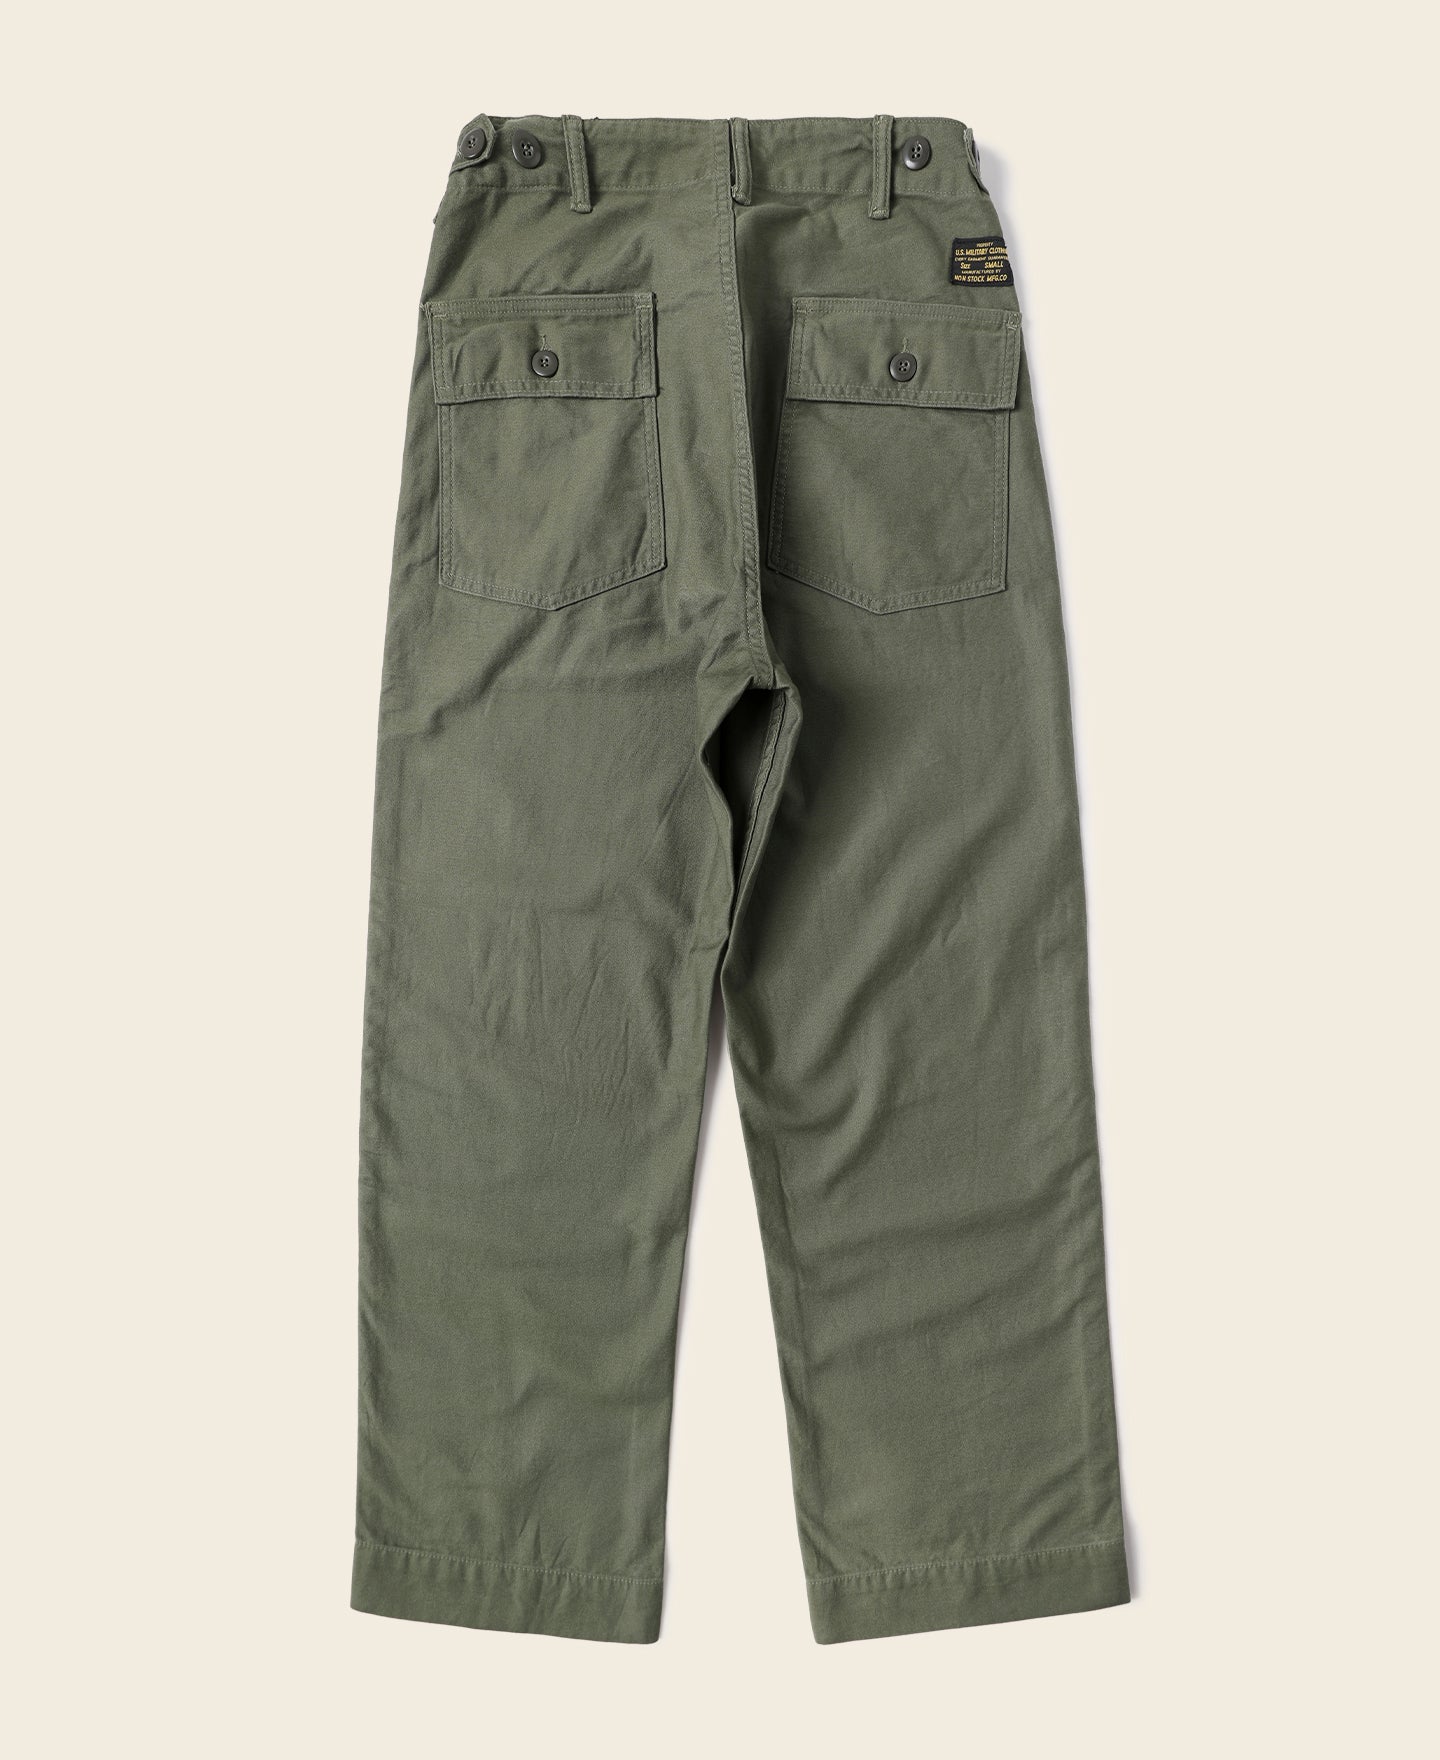 Saucezhan OG107 Fatigue Pants for U.S. Army Vietnam War Men's Baker Pants  Satin Cotton Regular Fit 